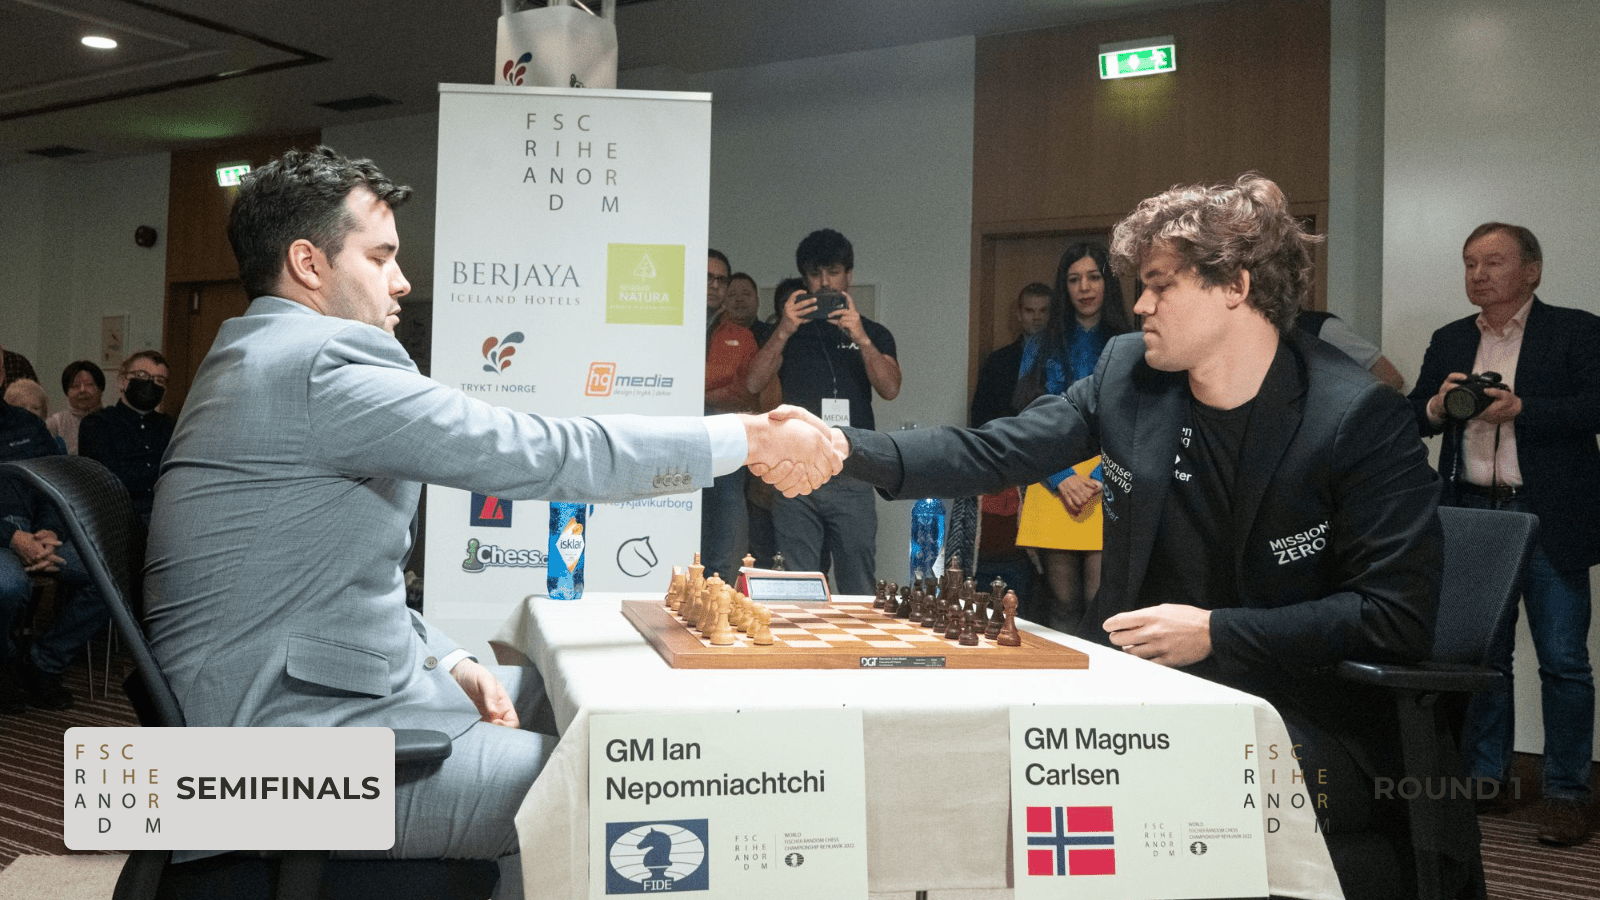 Anunciamos o Campeonato Mundial de Xadrez Fischer Random da FIDE